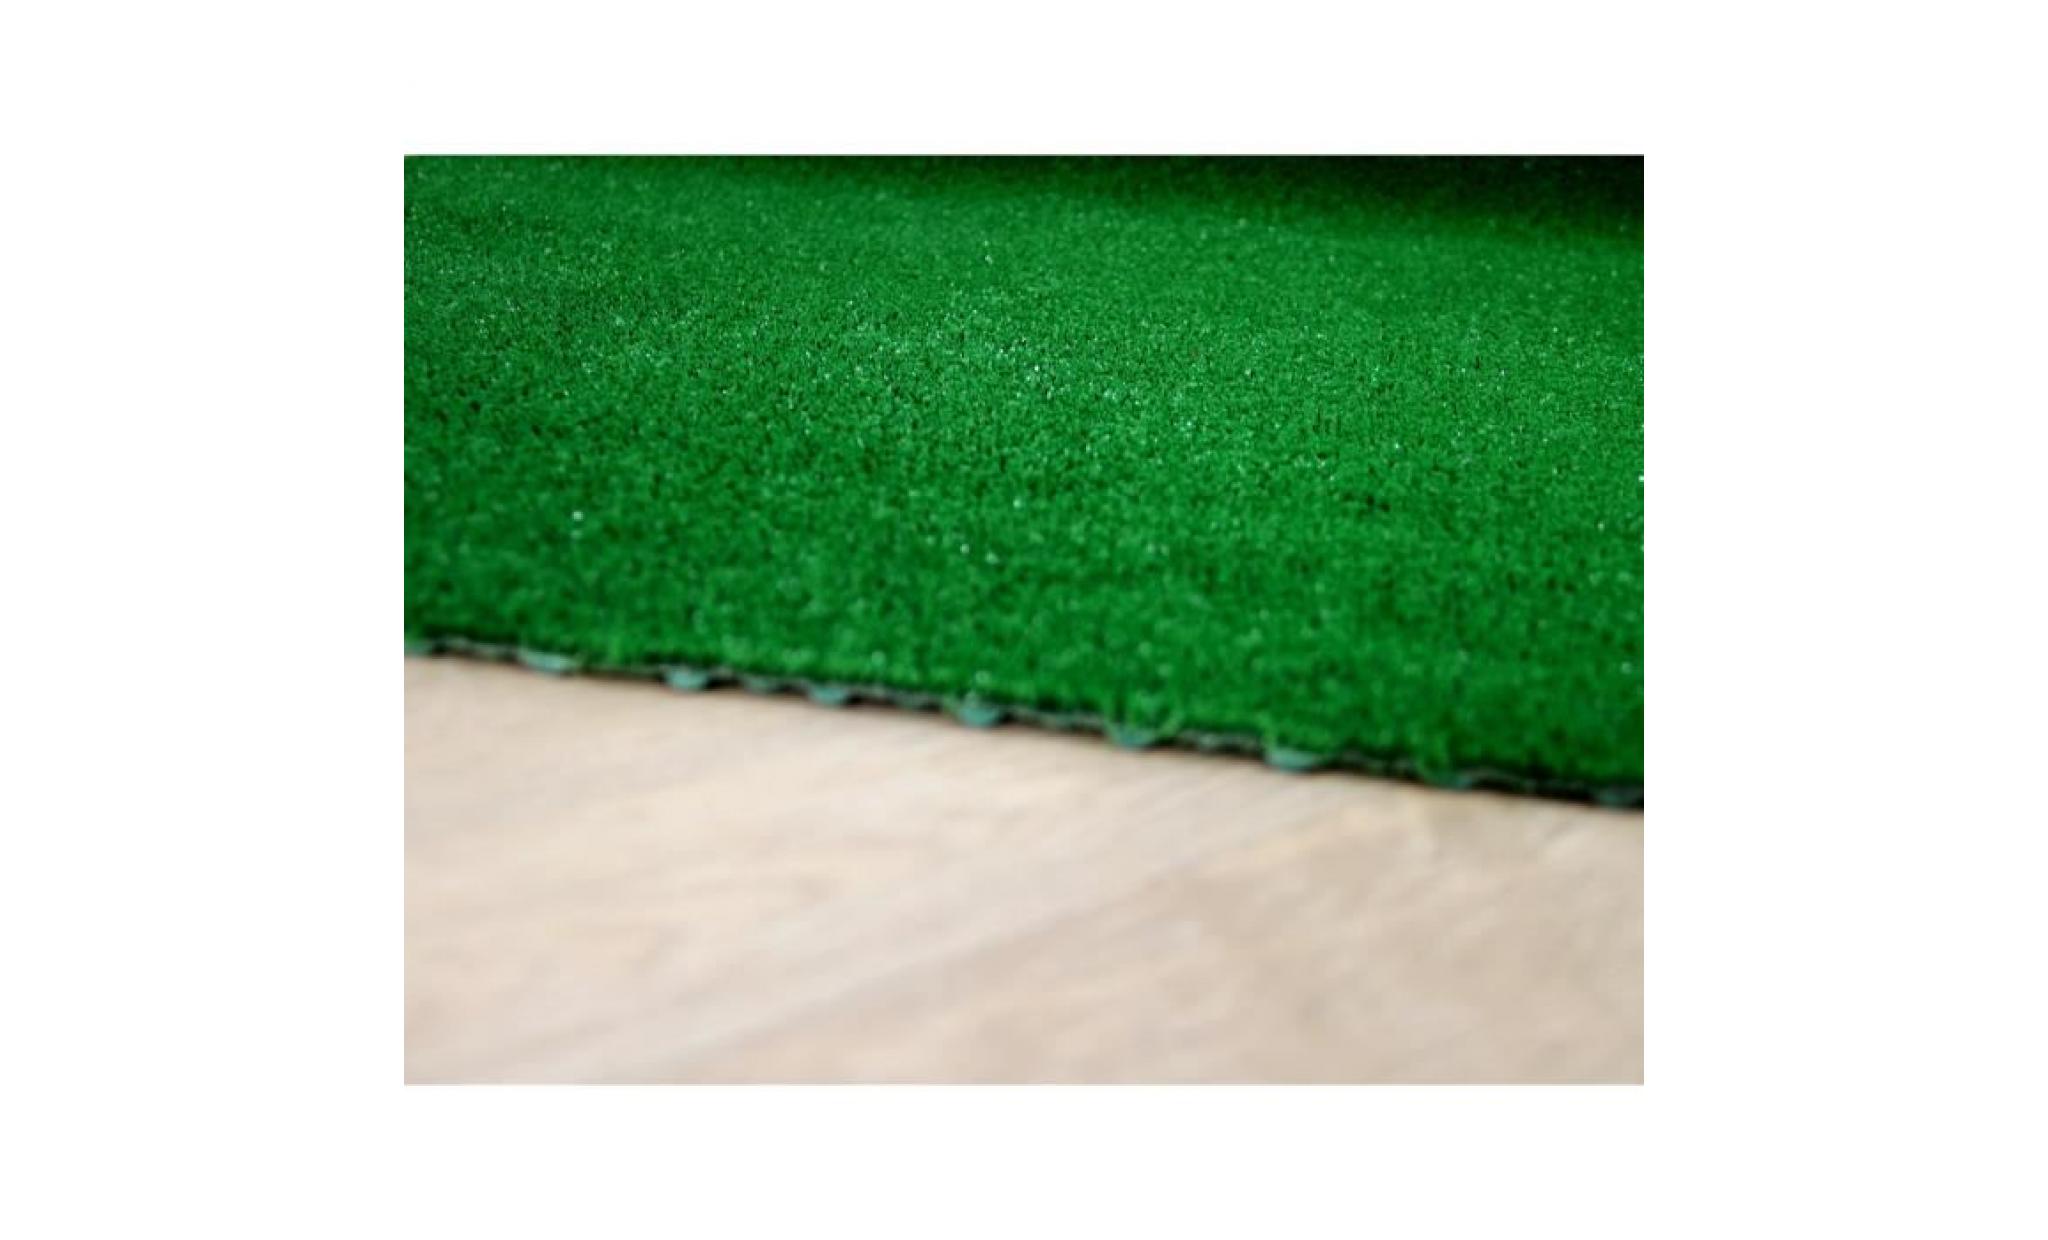 york   tapis type gazon artificiel avec nubs – pour jardin, terrasse, balcon   vert   [400x150 cm] pas cher